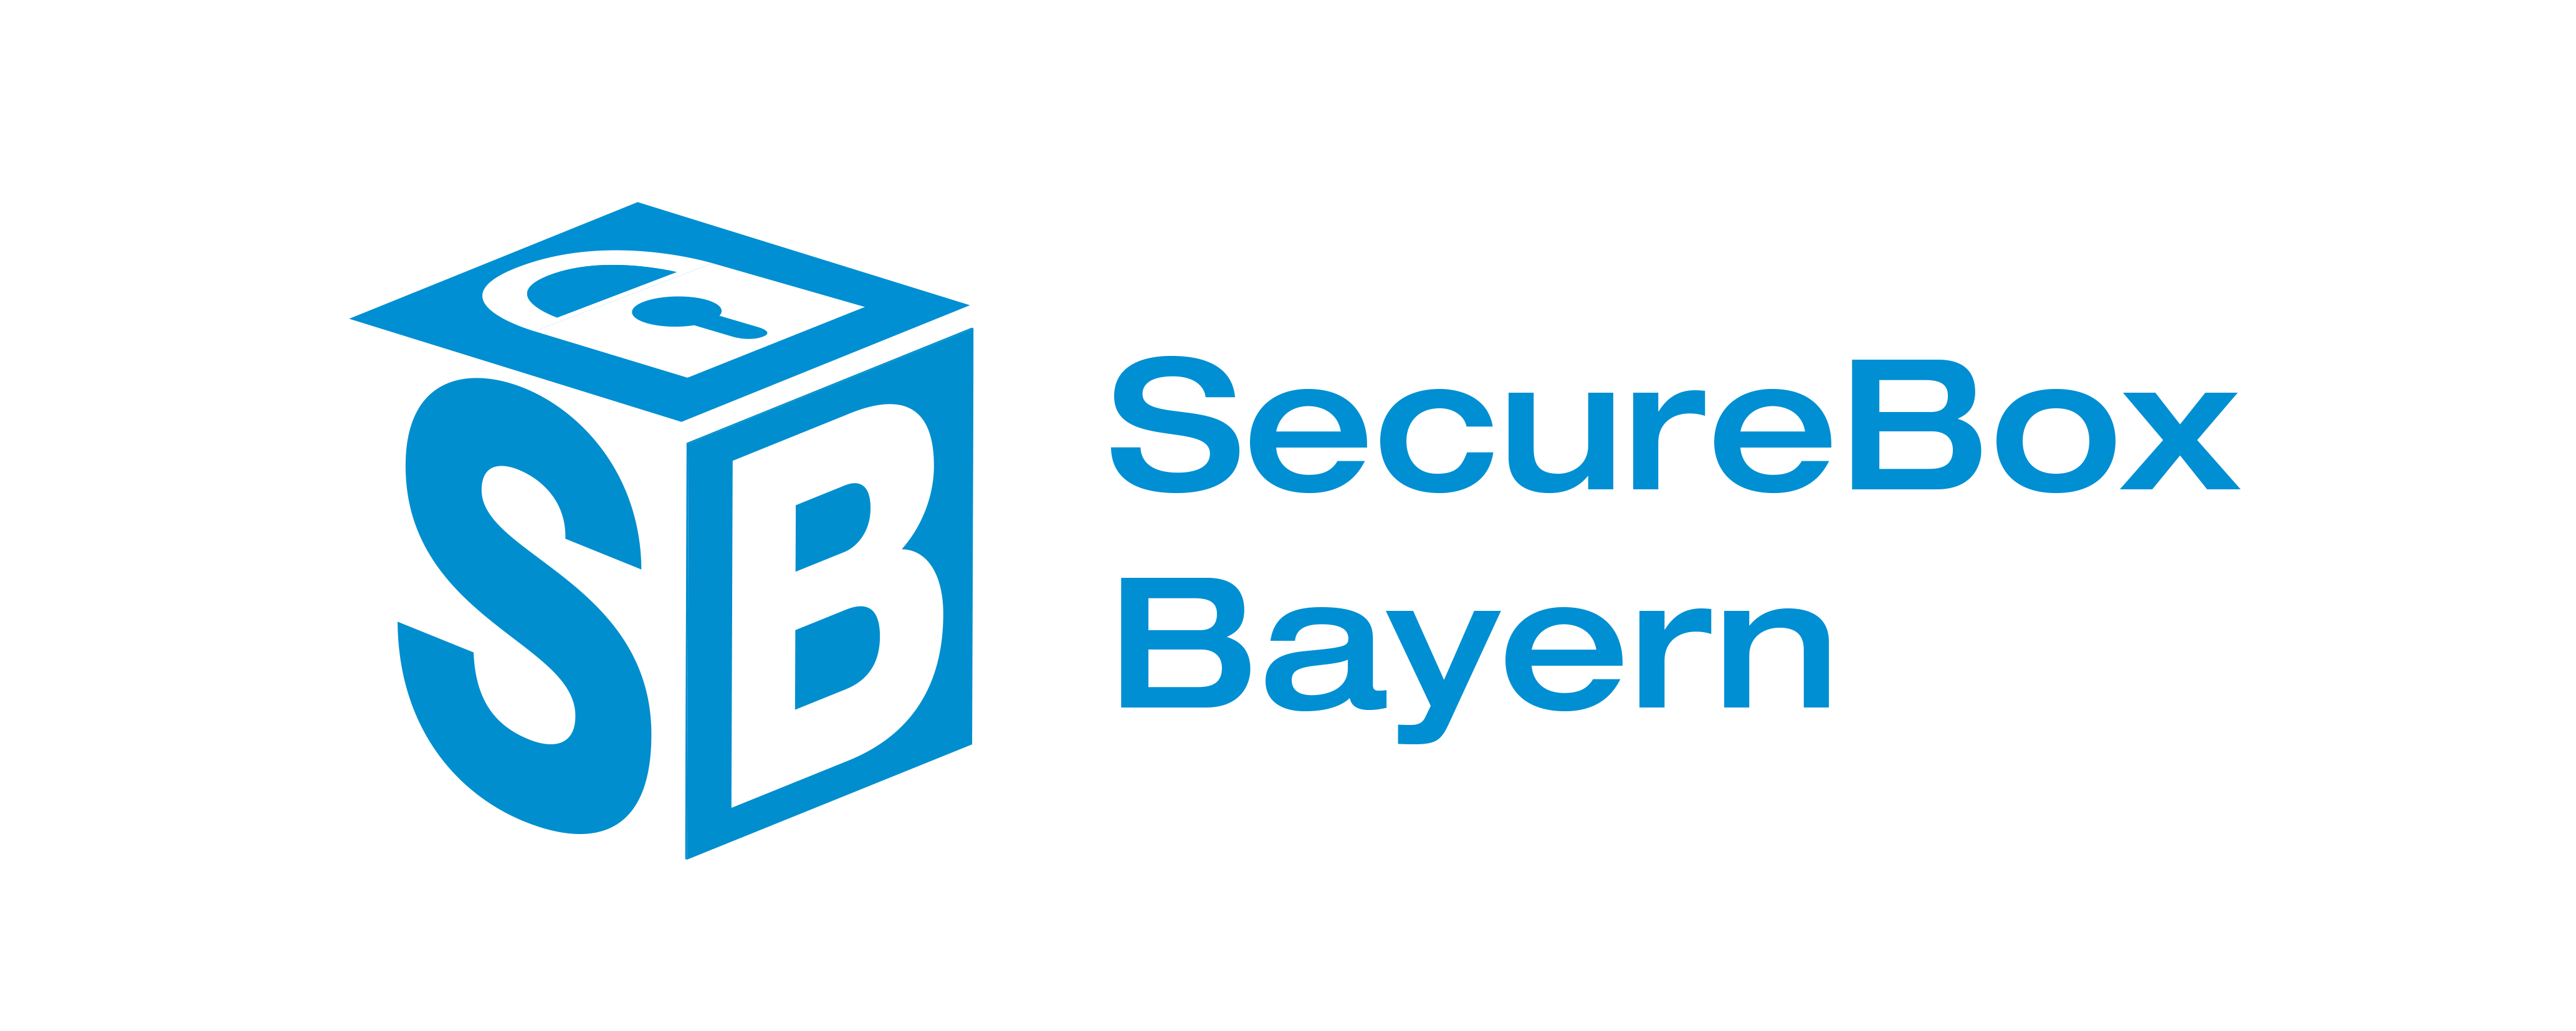 SecureBox Bayern